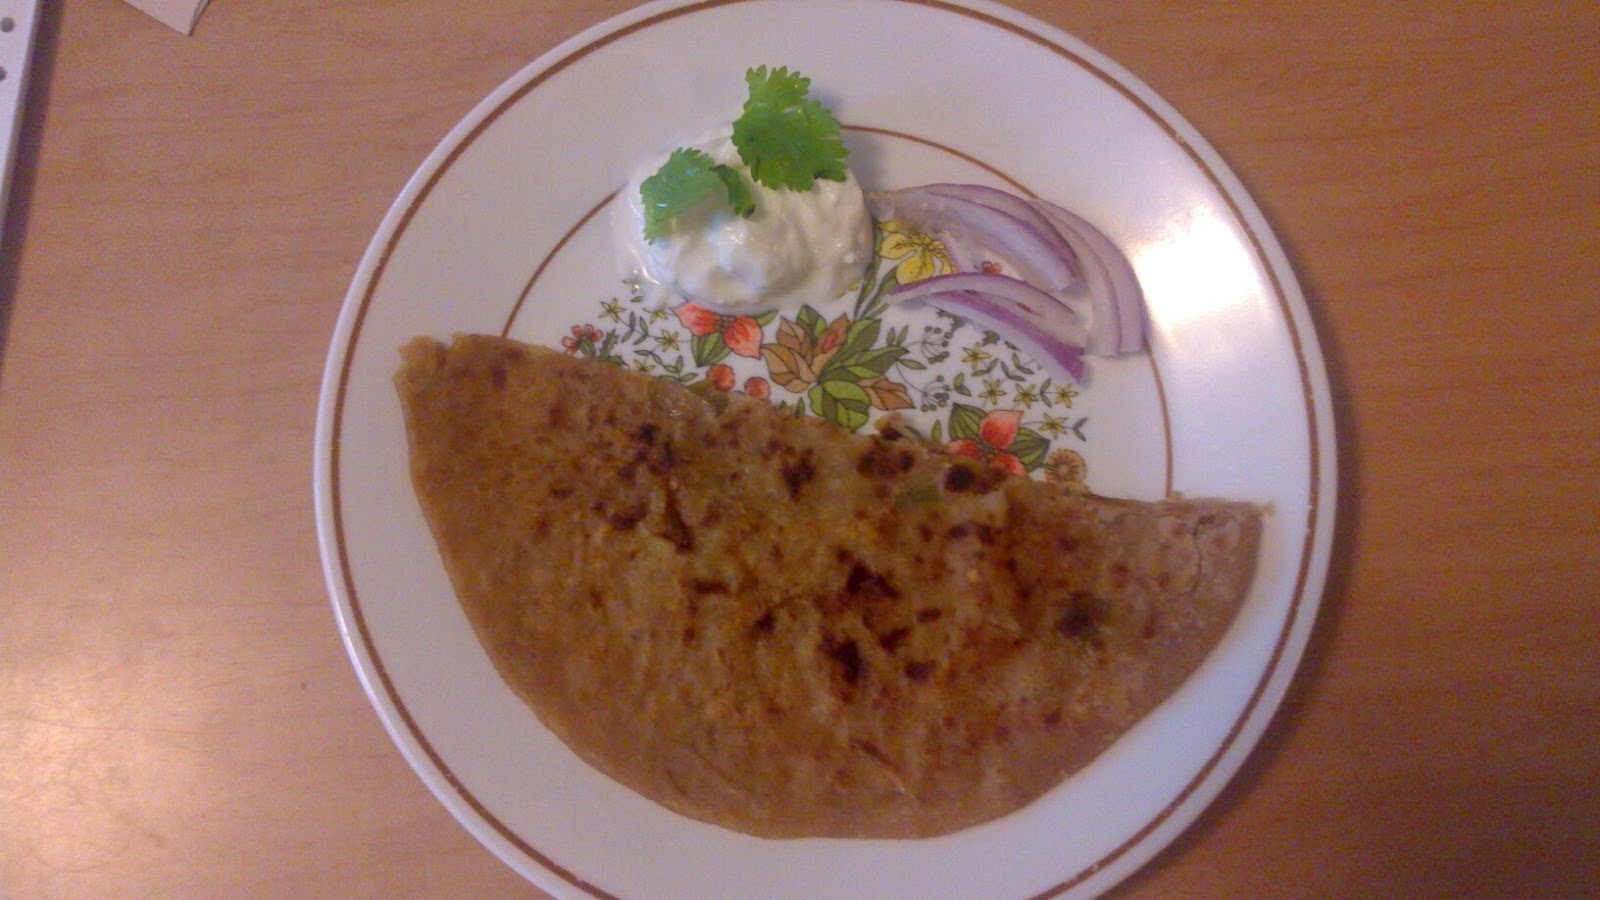 Aloo paratha brunch (potato pancakes)